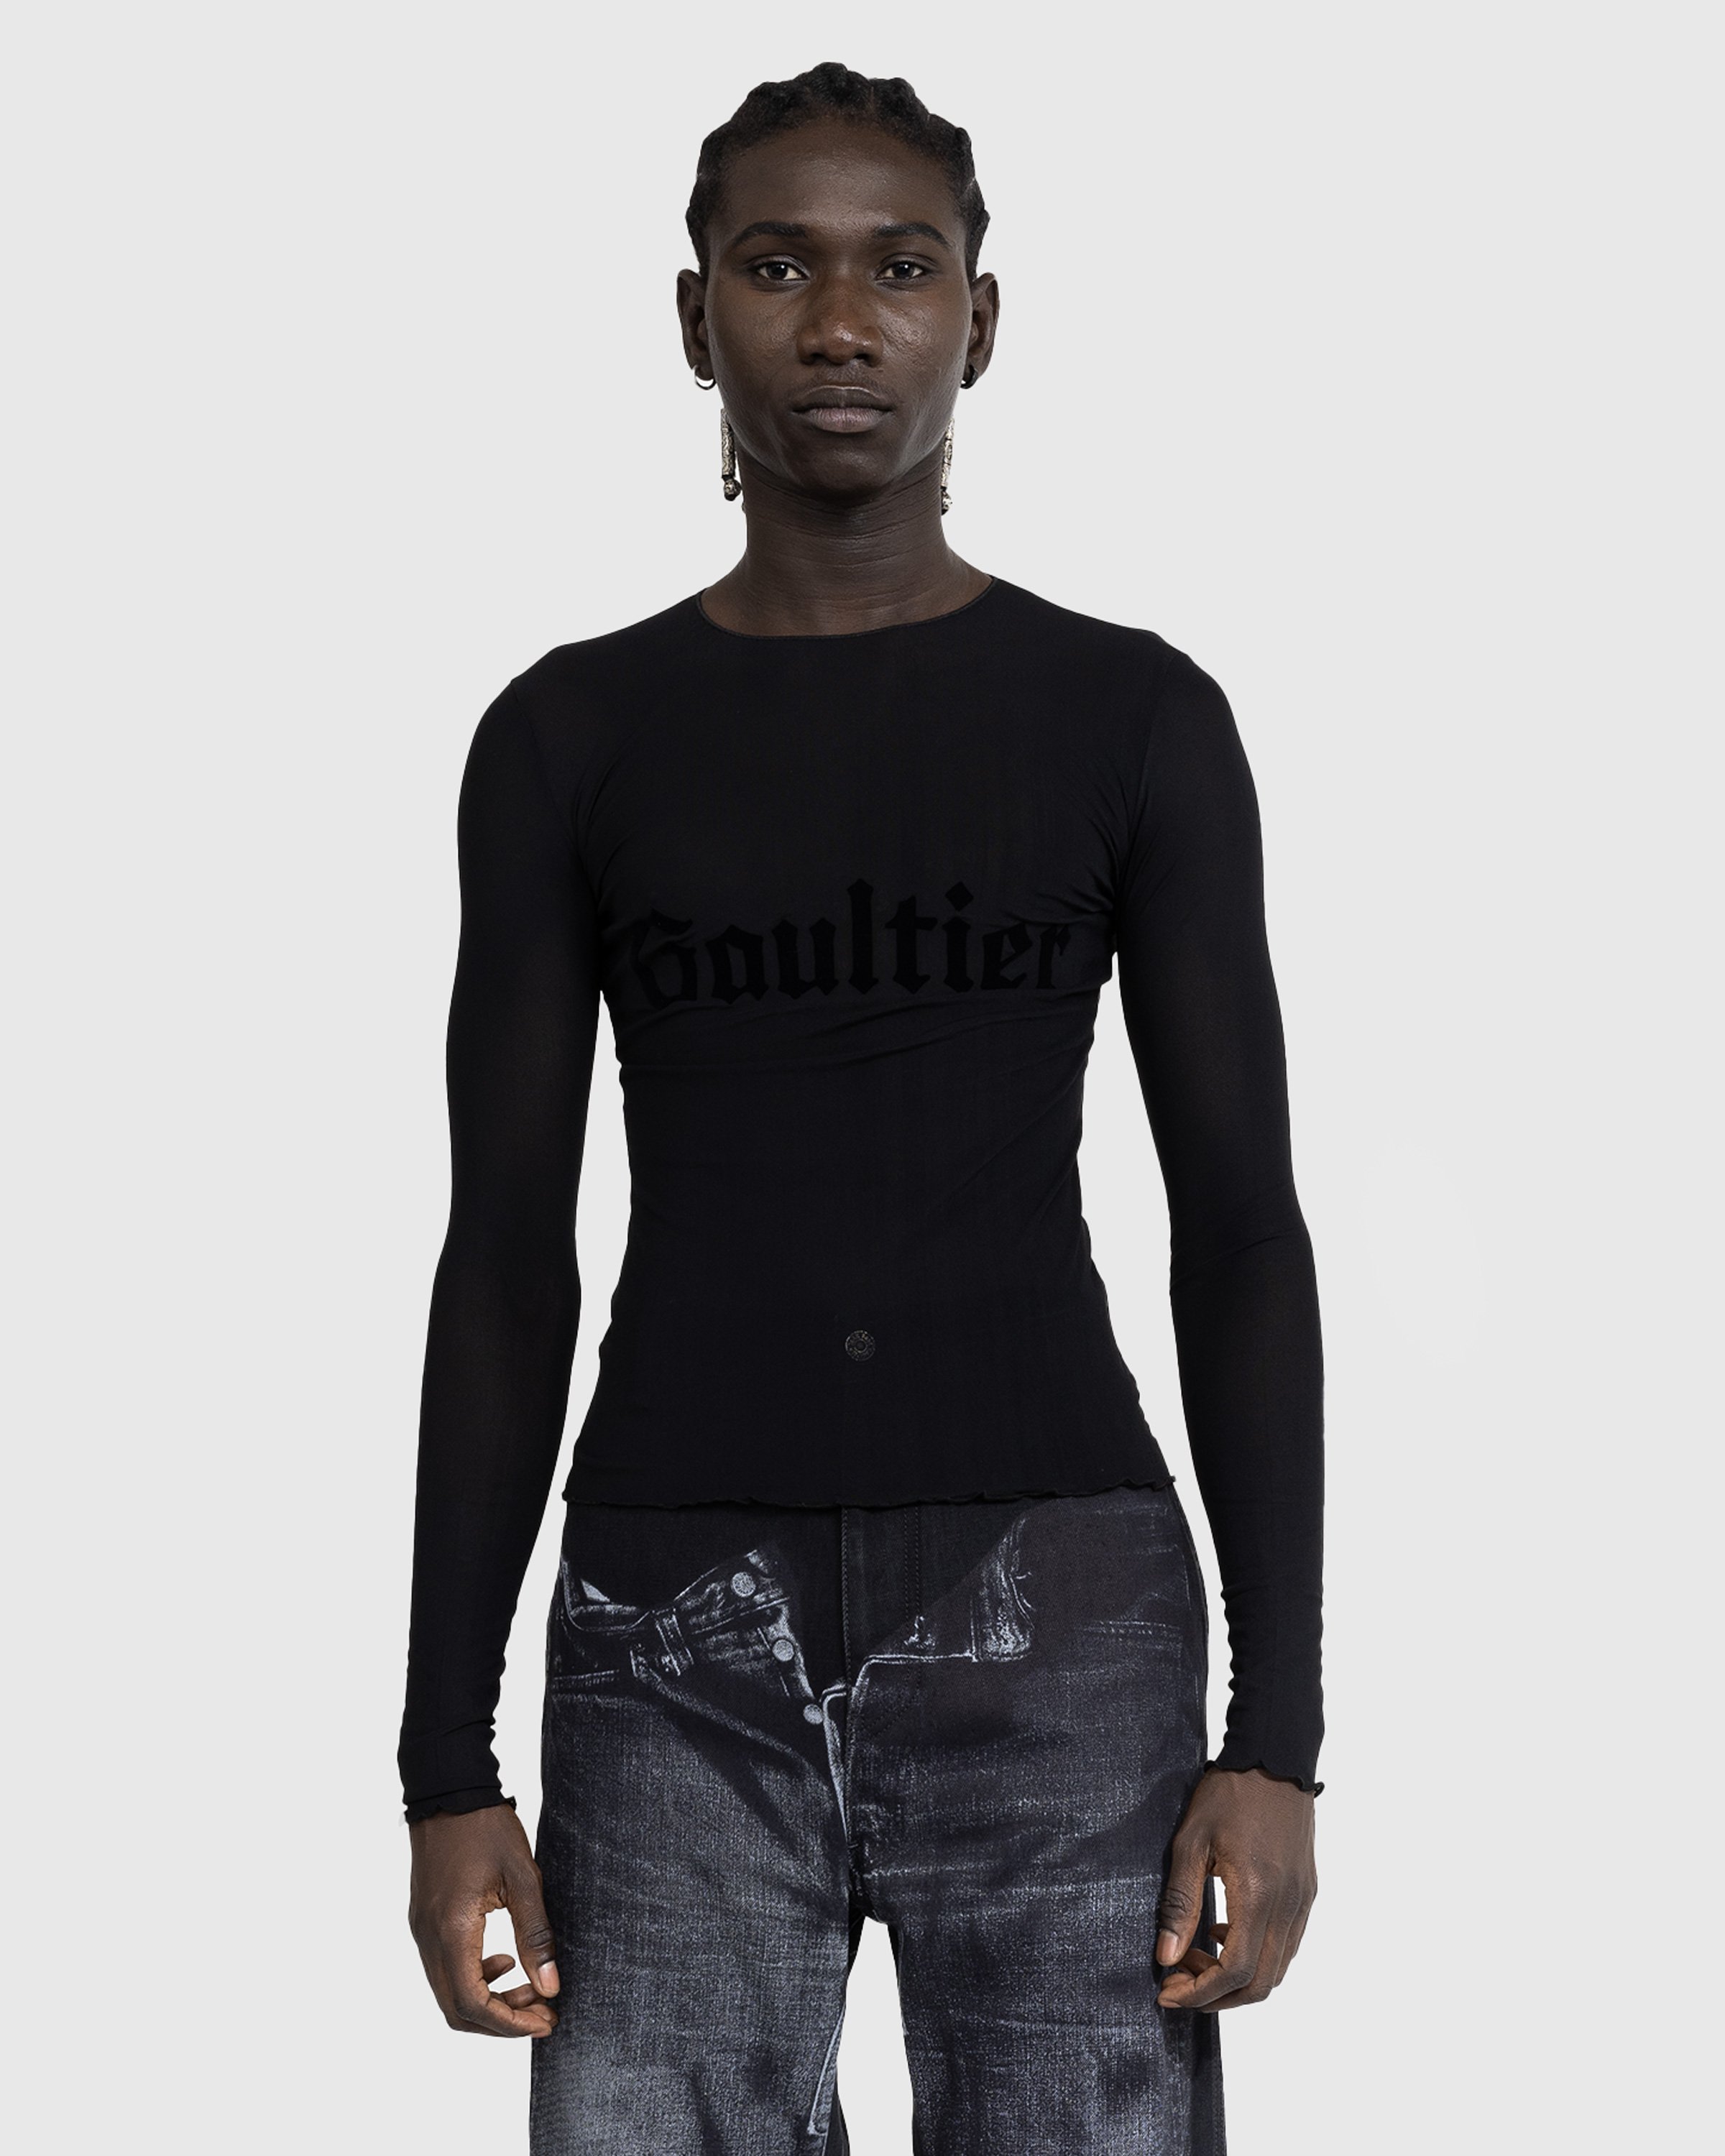 Jean Paul Gaultier - Velvet Gaultier Long-Sleeve Black - Clothing - Black - Image 2